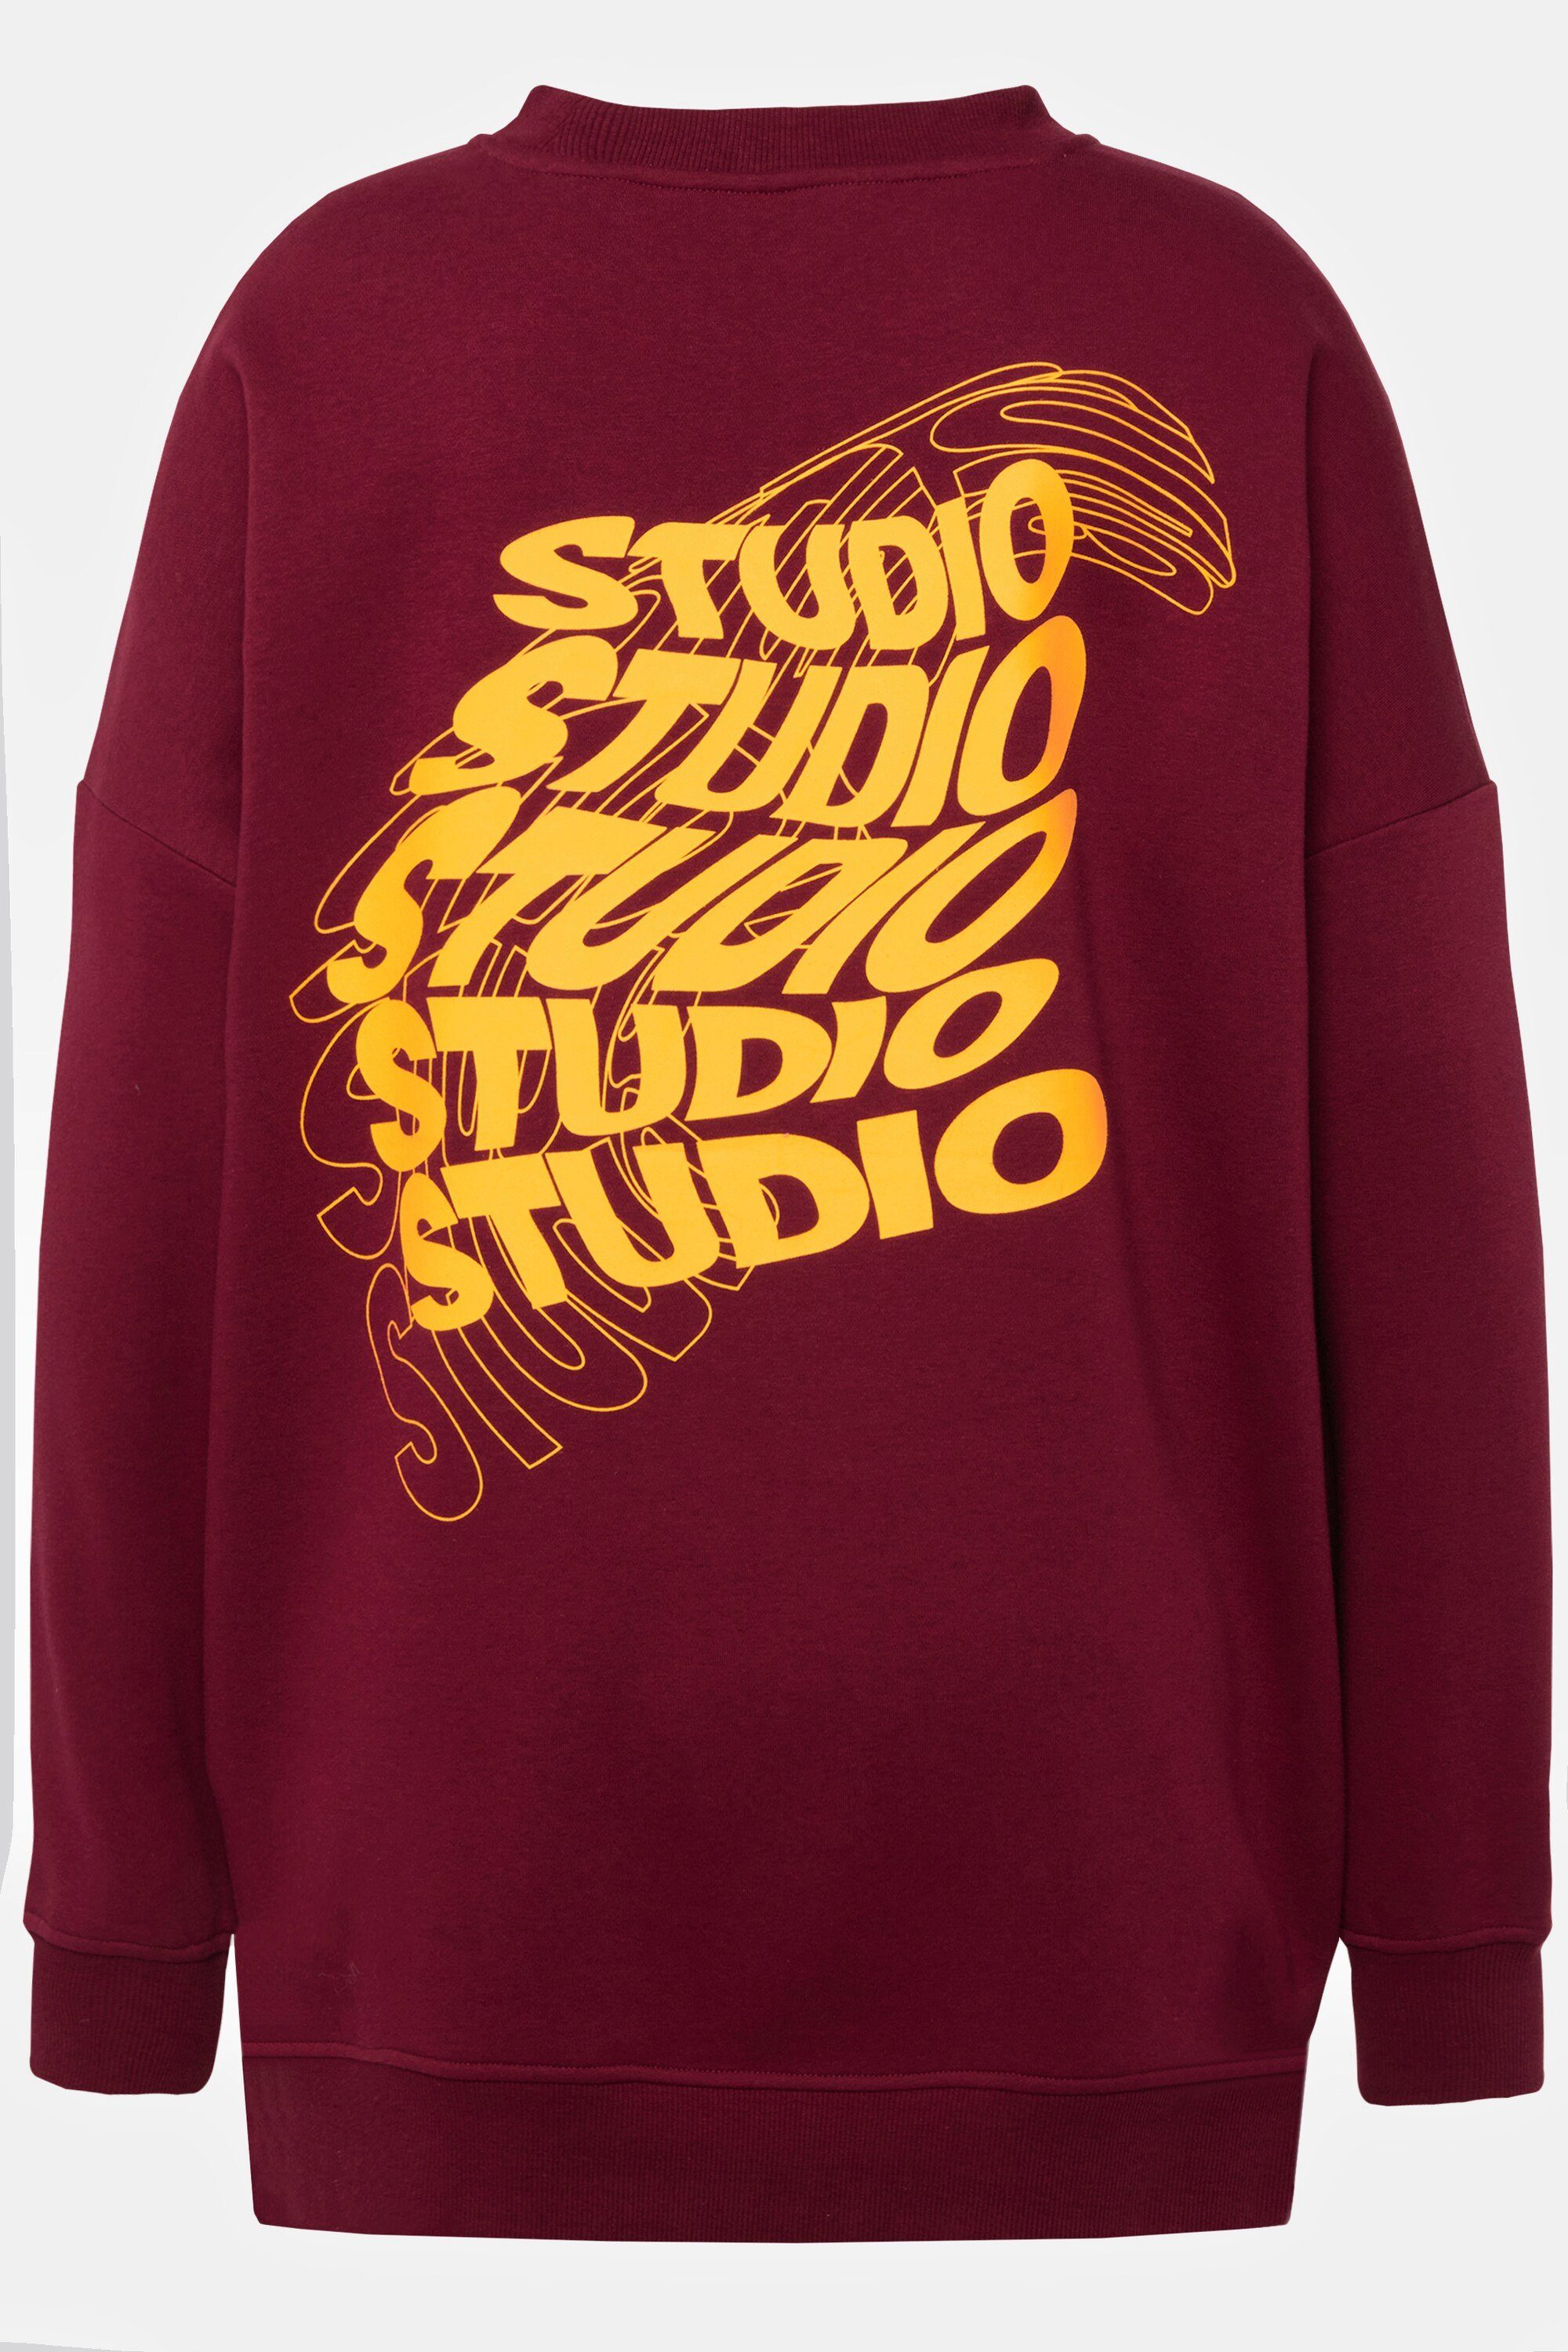 Rücken Sweatshirt Studio Print Rundhals Langarm Sweatshirt Untold oversized